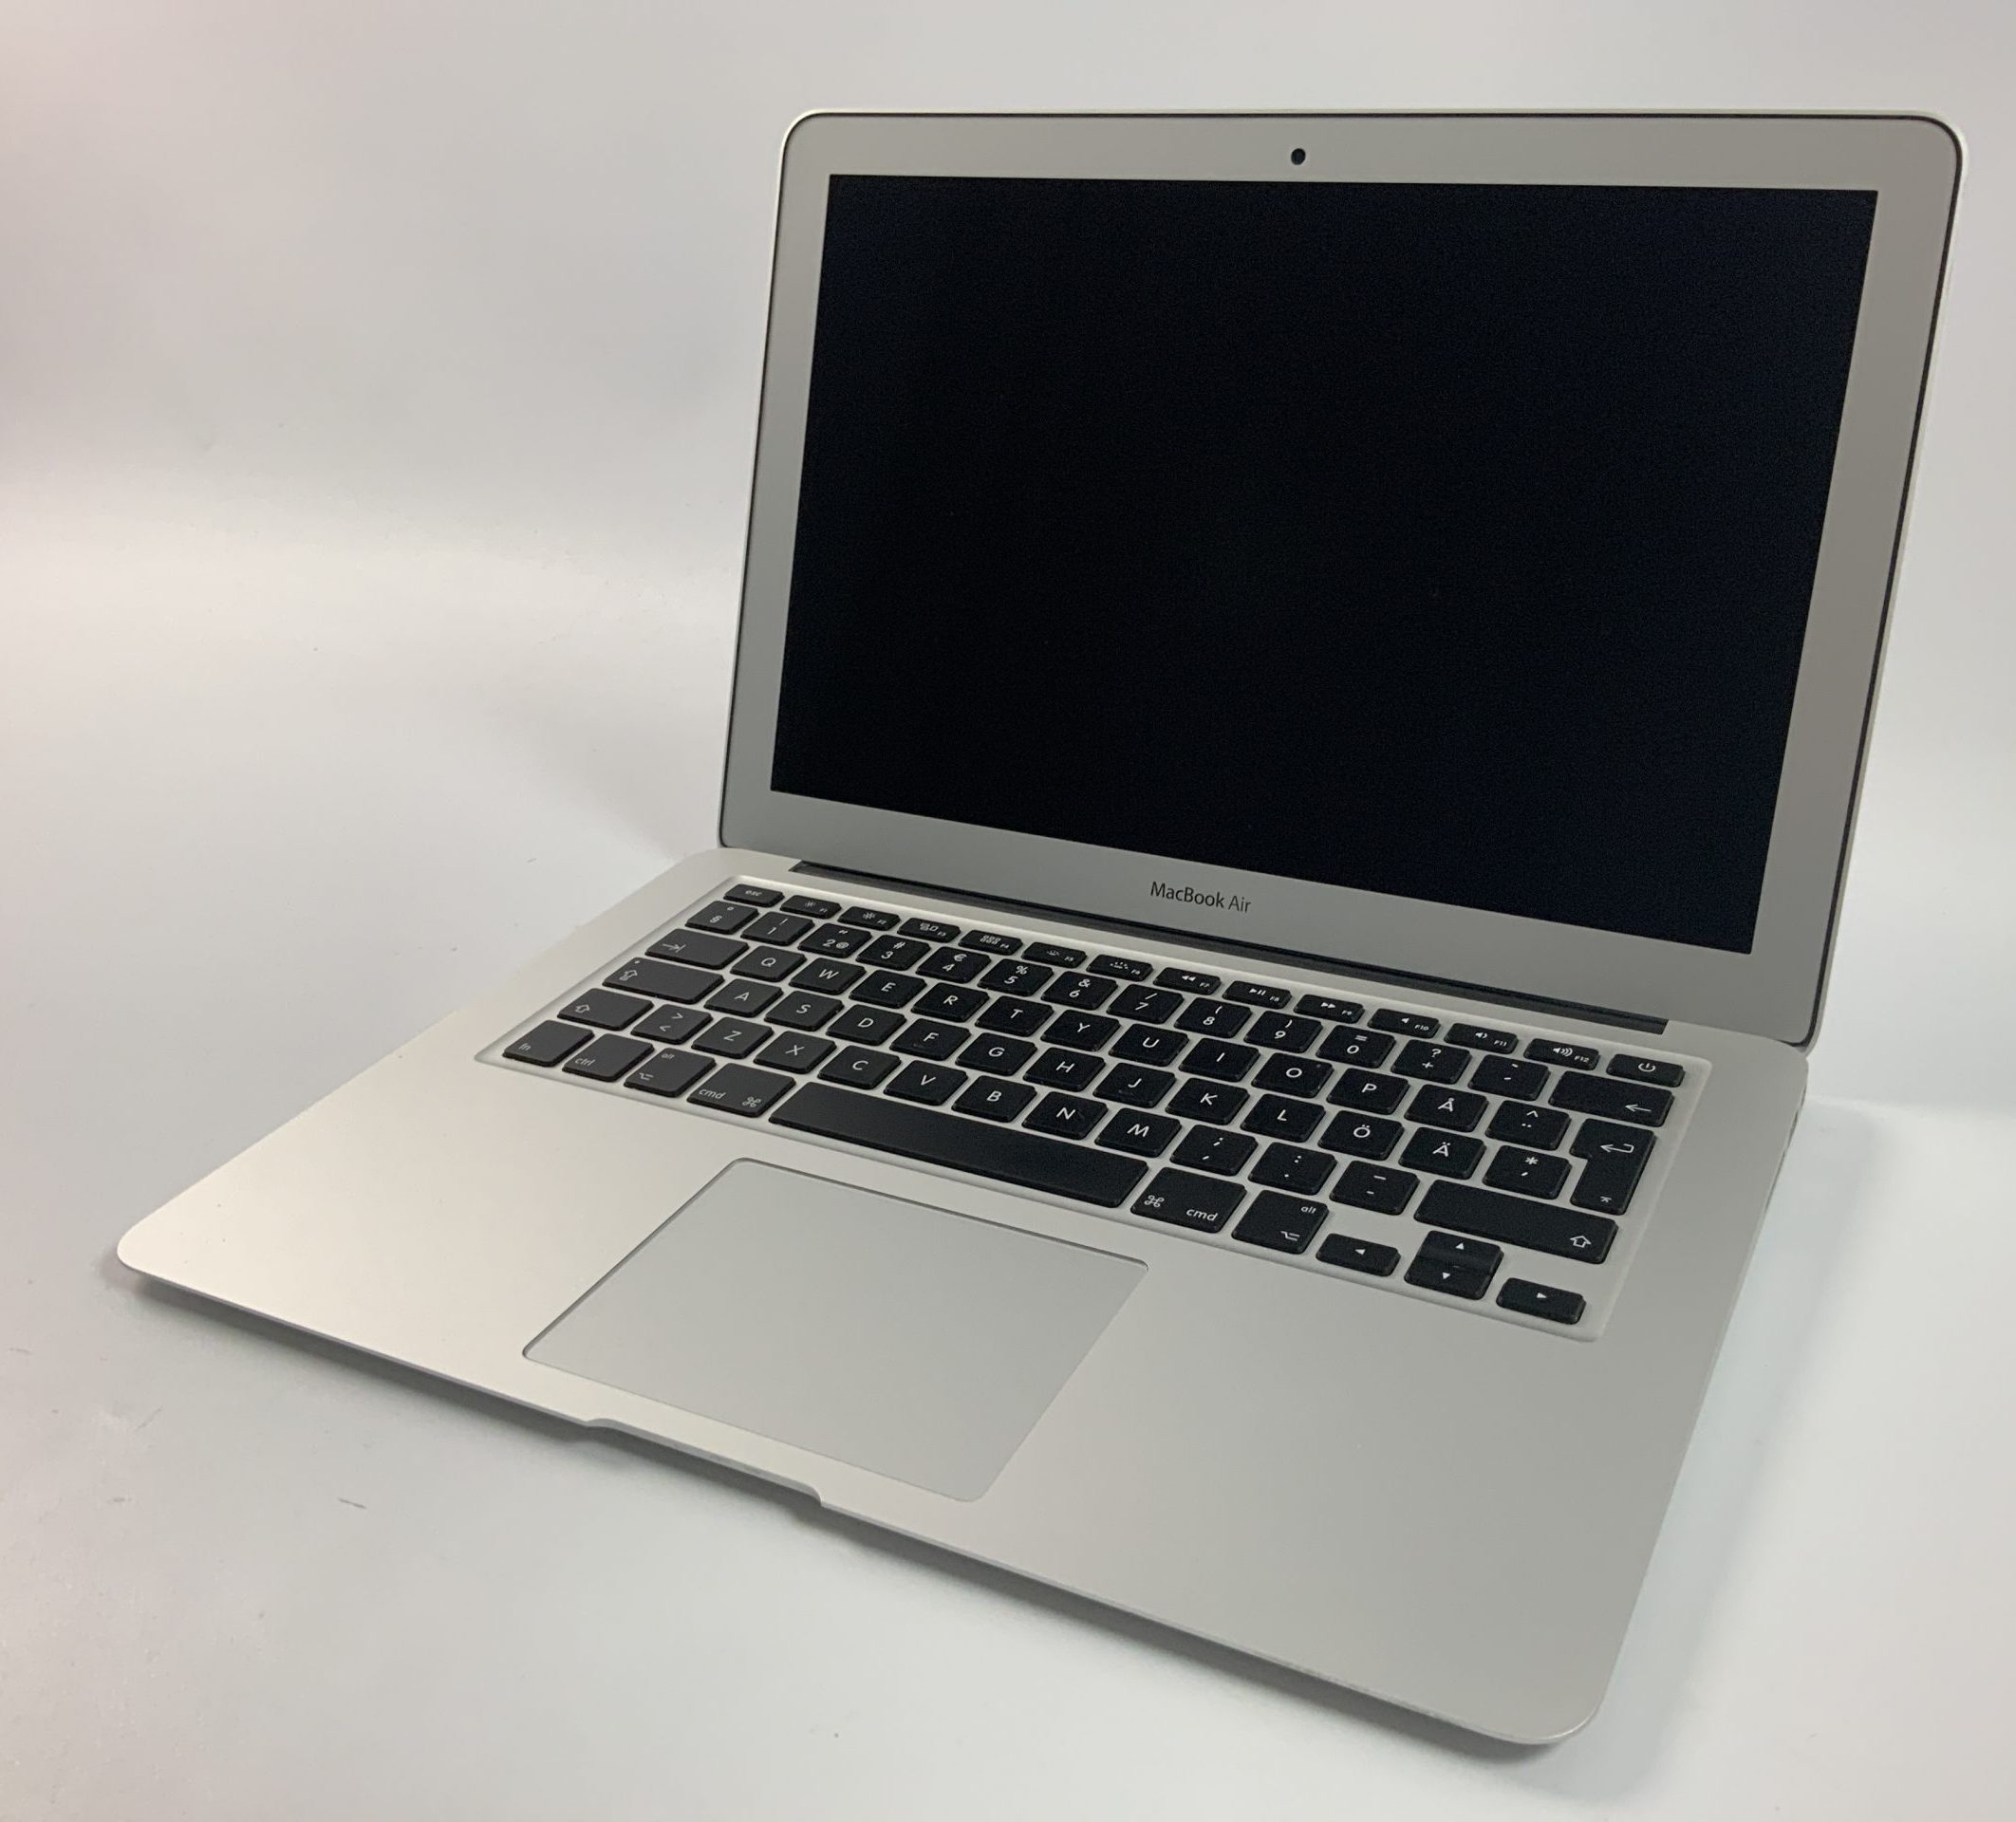 MacBook Air 13" Early 2015 (Intel Core i5 1.6 GHz 8 GB RAM 128 GB SSD), Intel Core i5 1.6 GHz, 8 GB RAM, 128 GB SSD, image 1